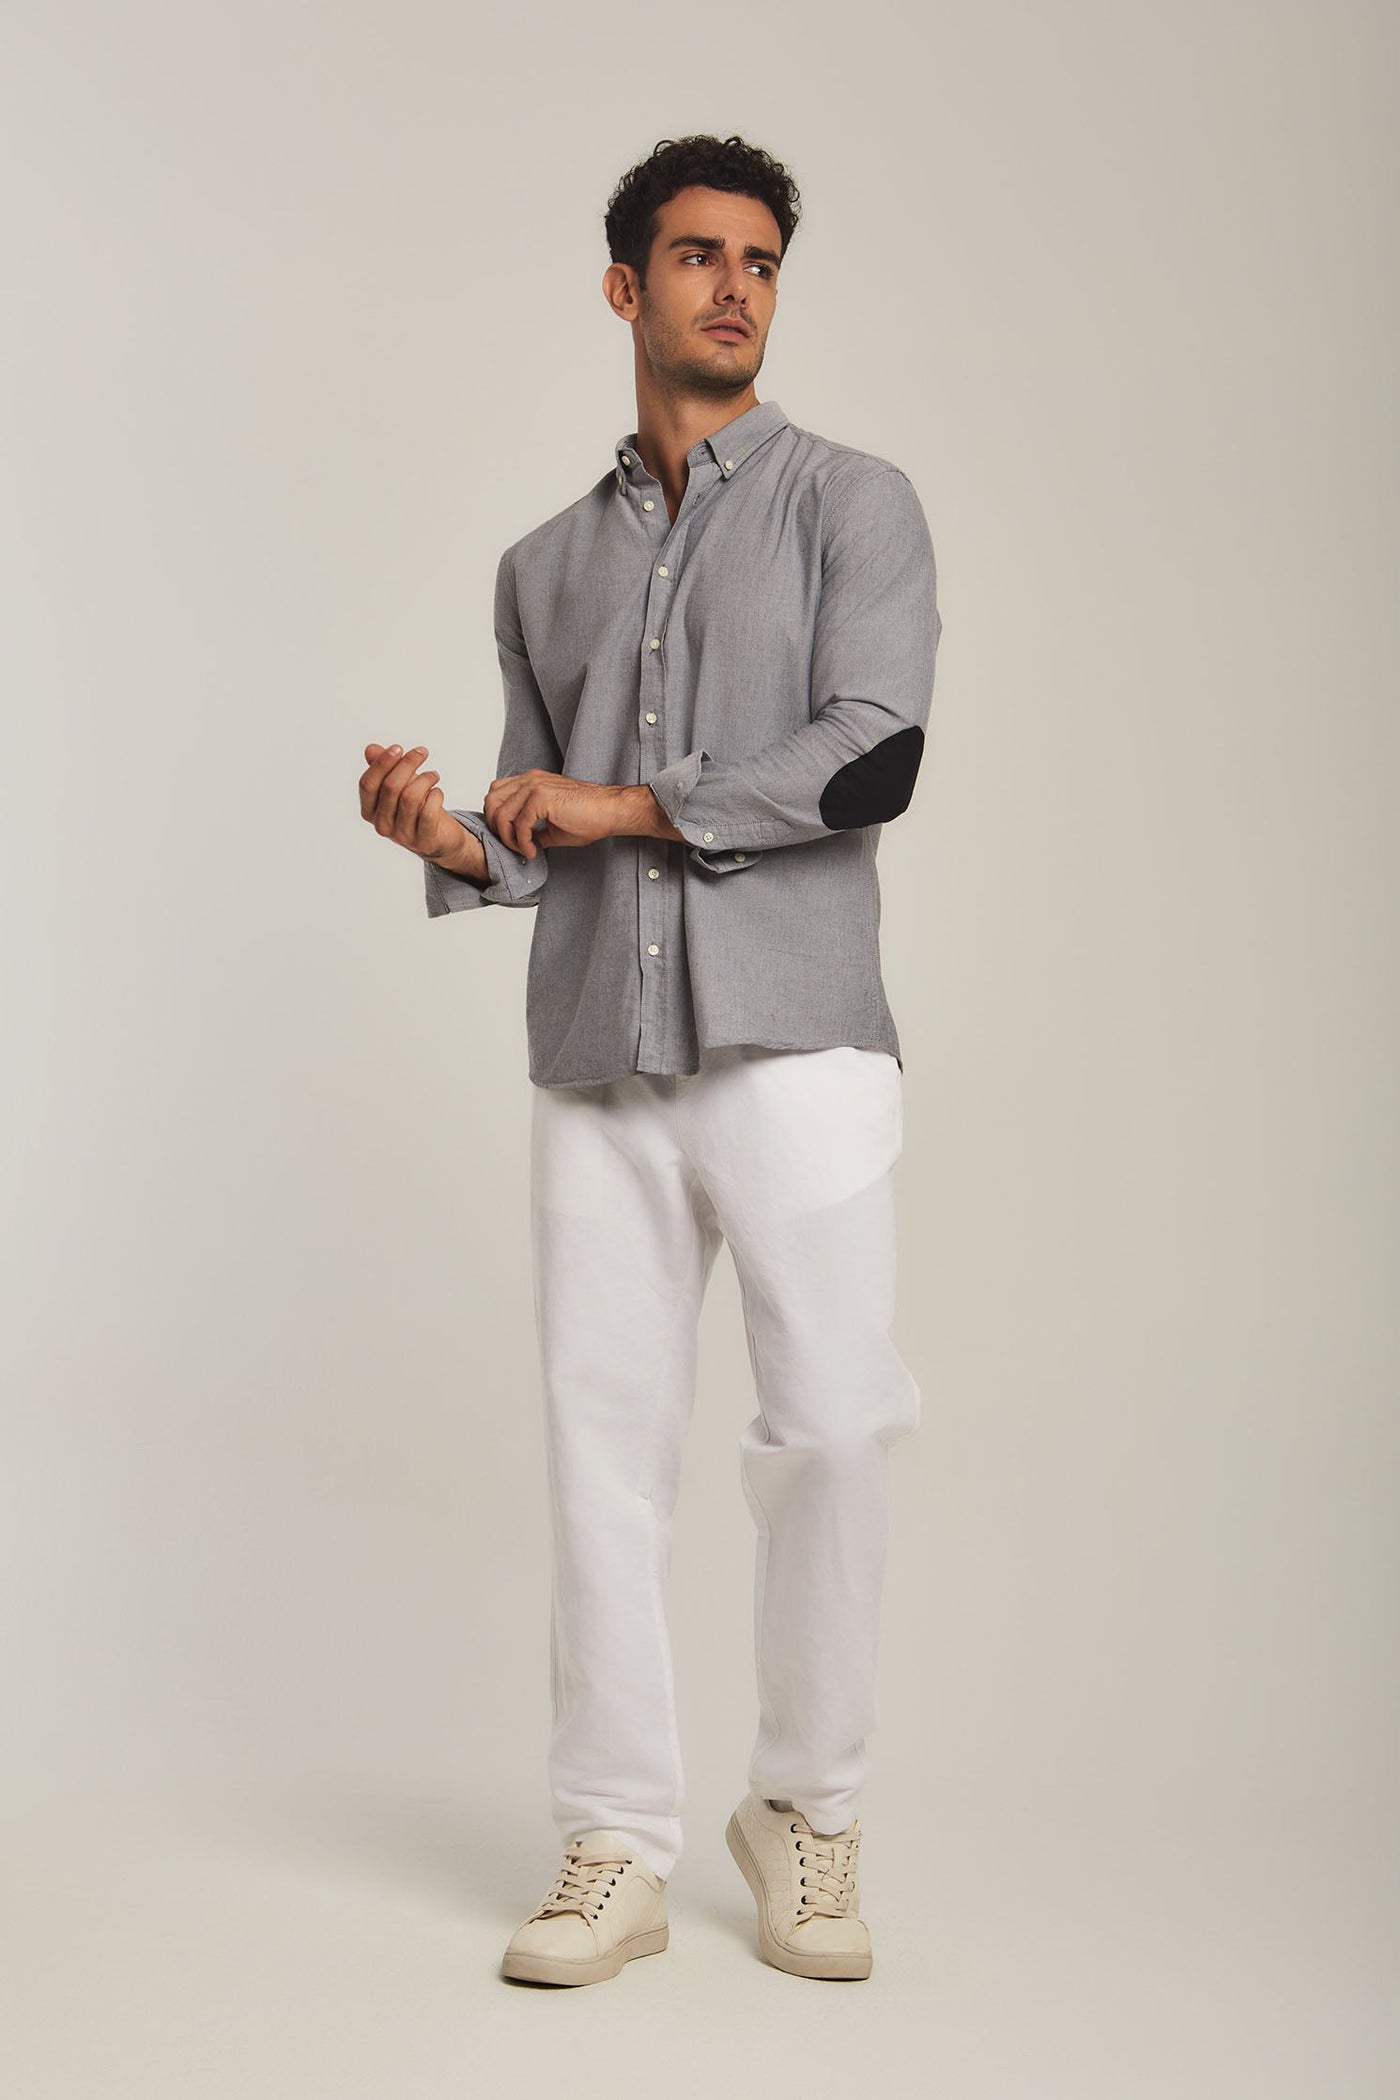 Shirt - Plain - Long Sleeves